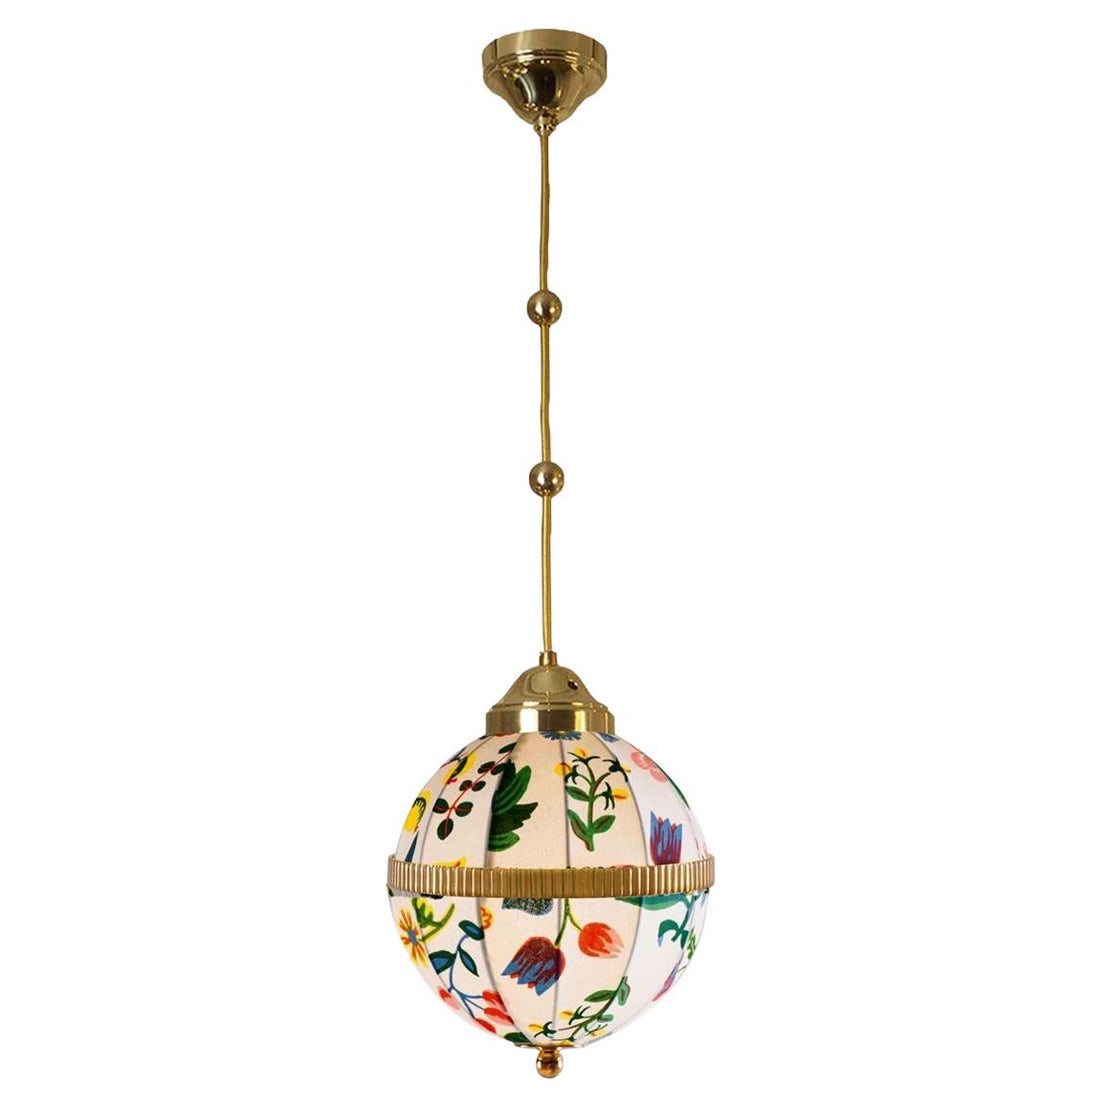 Handsewn fabric shade pendant , design by Josef Frank for Svenskt Tenn For Sale